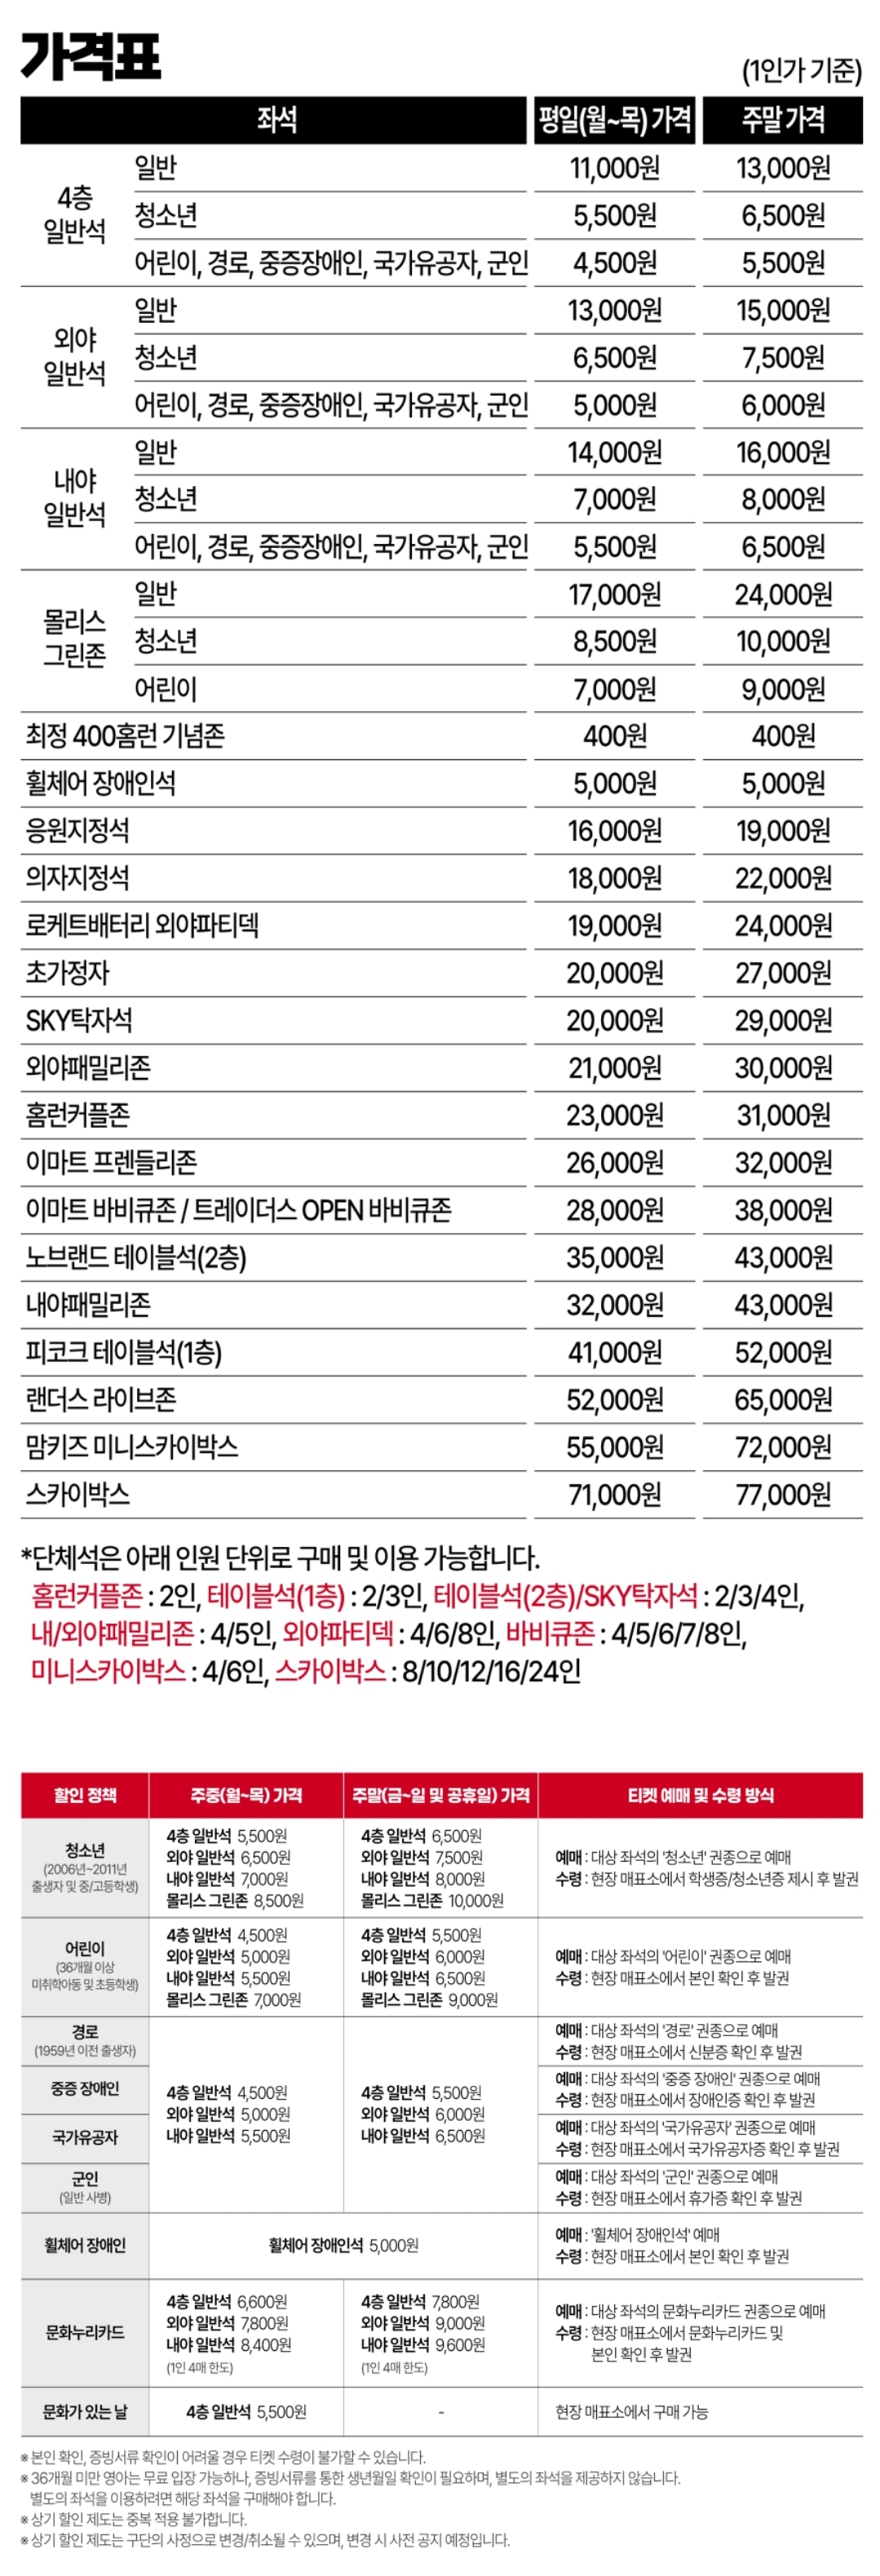 SSG랜더스 인천 SSG랜더스필드 입장권 금액&#44; 티켓 가격&#44; 할인&#44; 예매